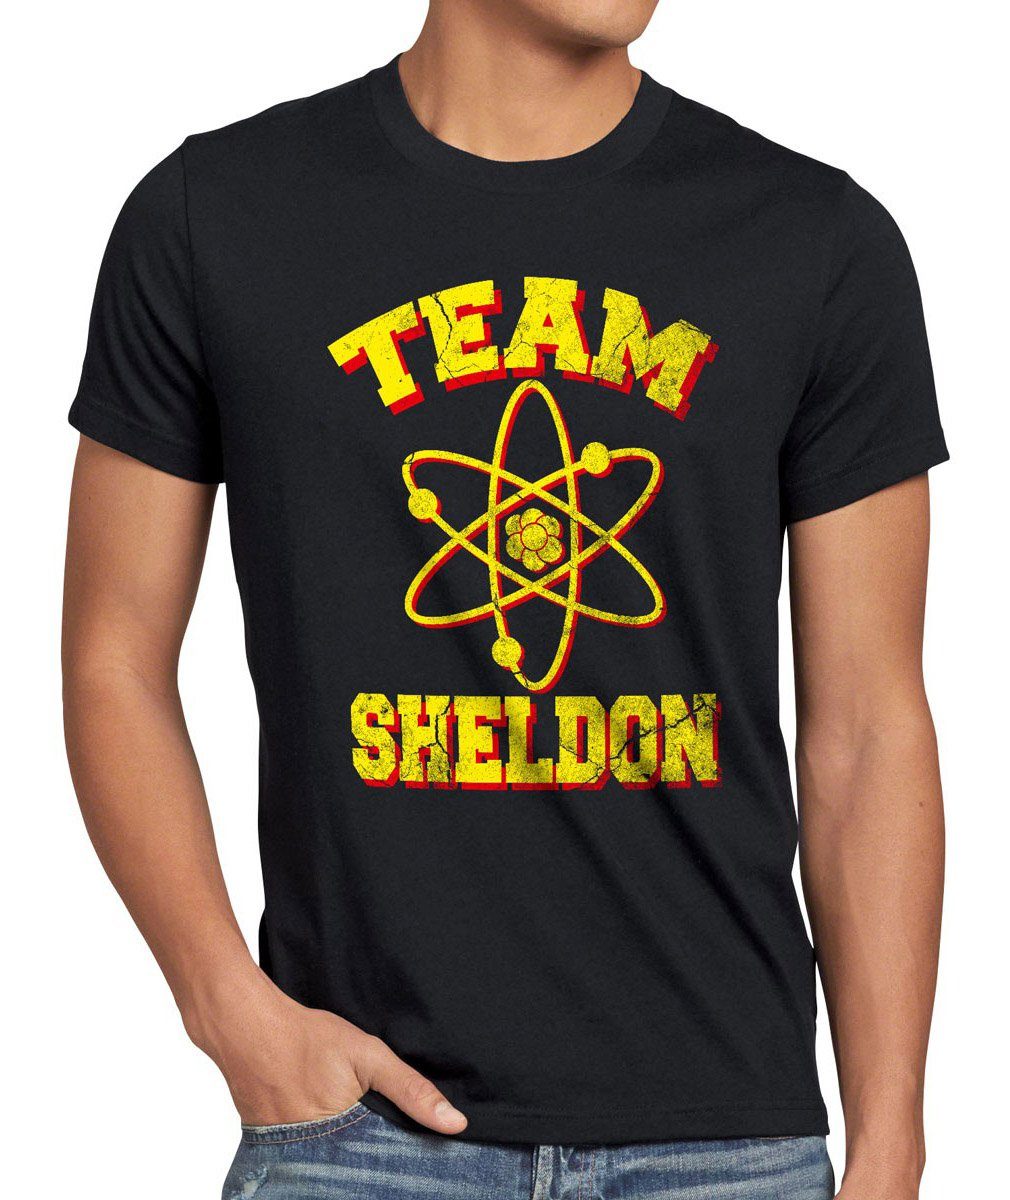 T-Shirt Sheldon Print-Shirt college Team bang Herren cooper theory bazinga big tbbt atom schwarz the style3